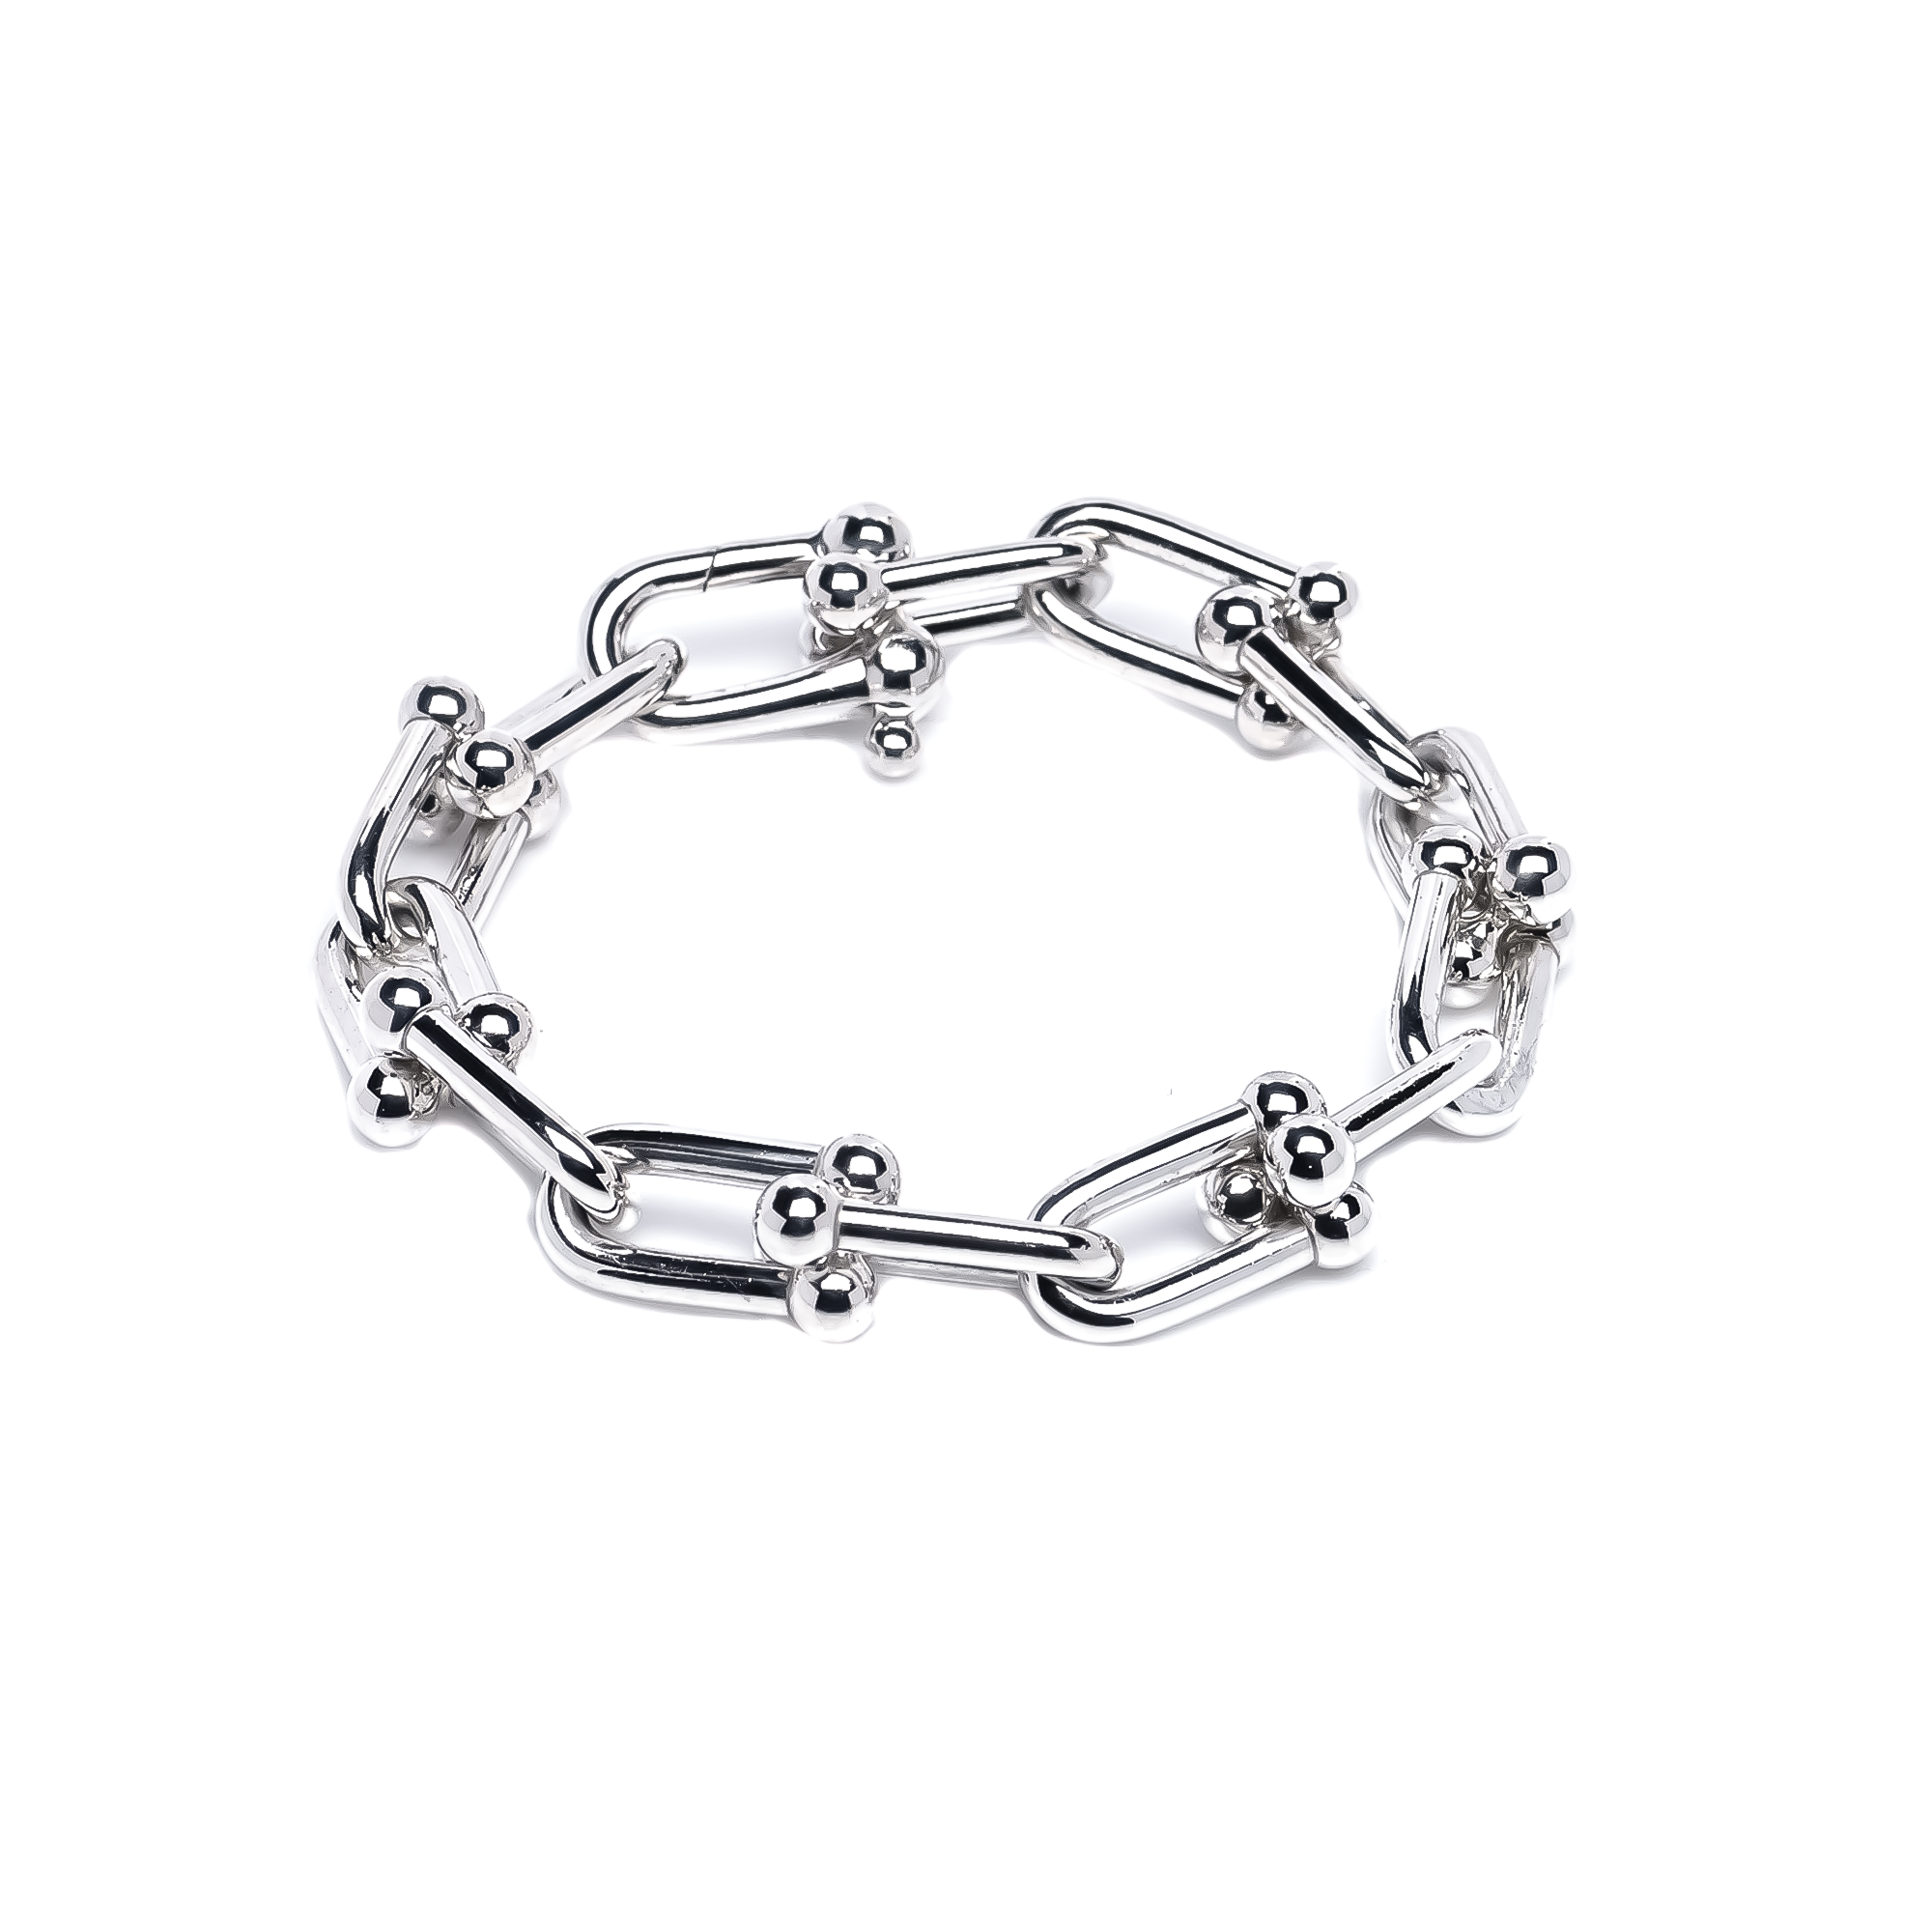 Handmade Chain and Links Bracelet for Women | Tanzire